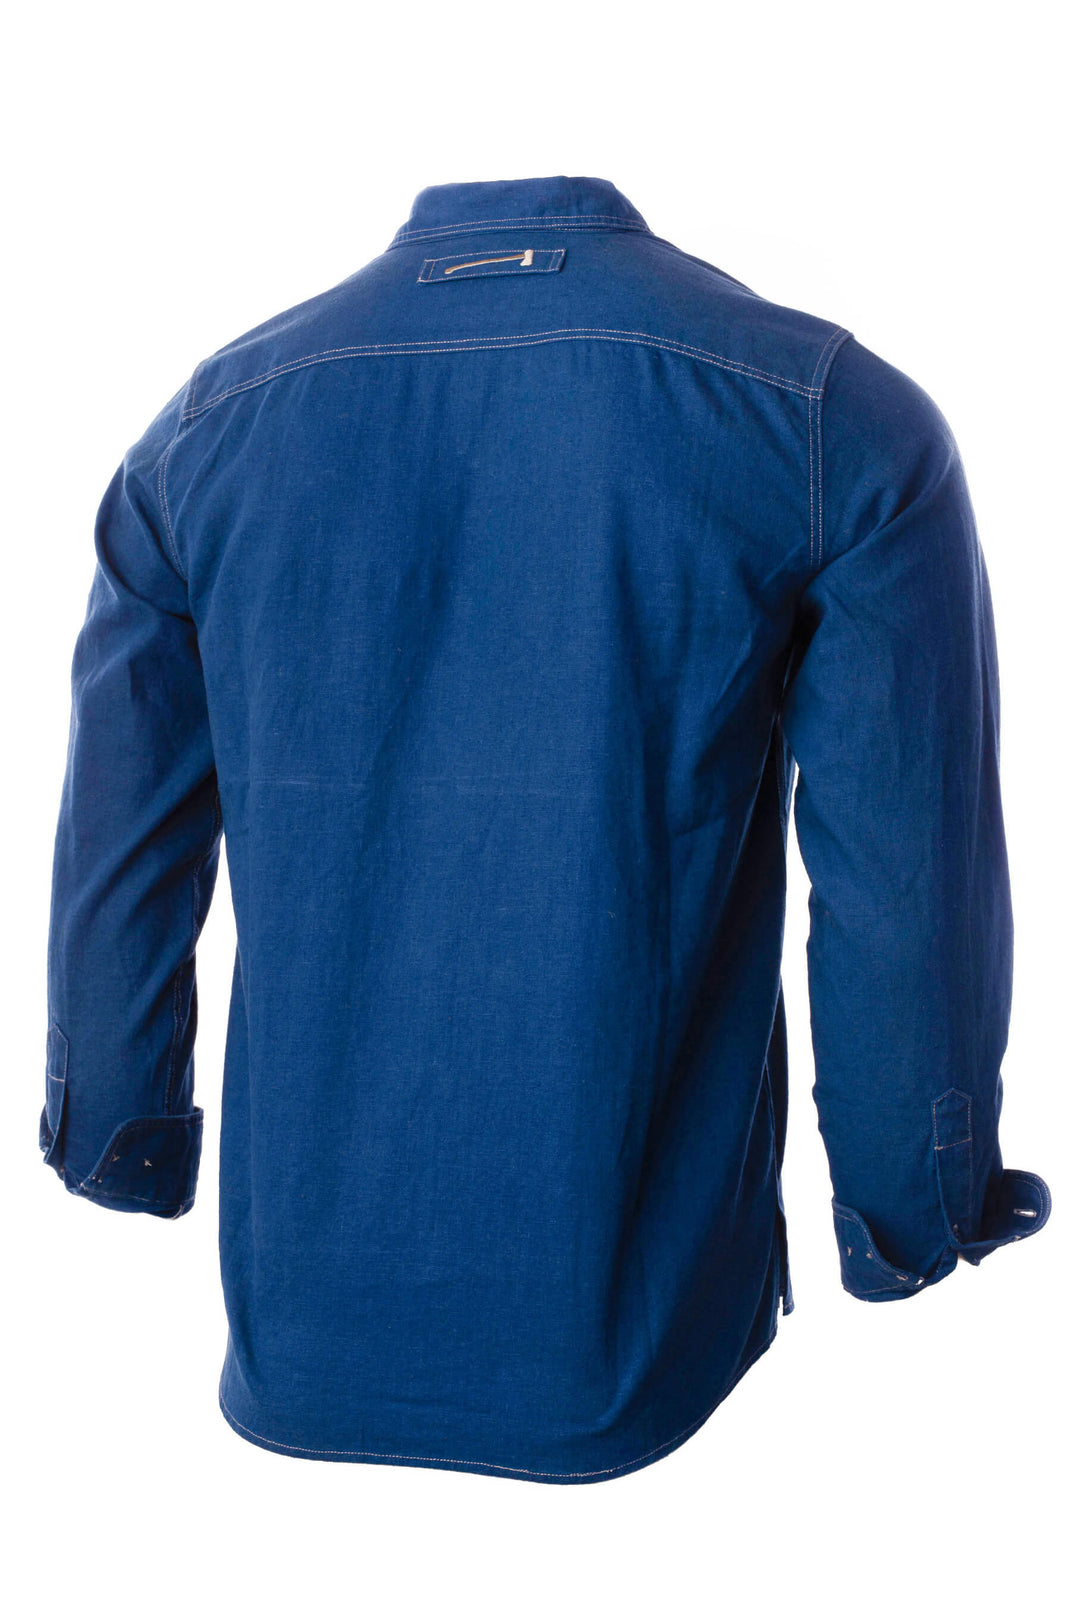 Boundary Chamois Shirt - Back - Woodroad Gear Co.